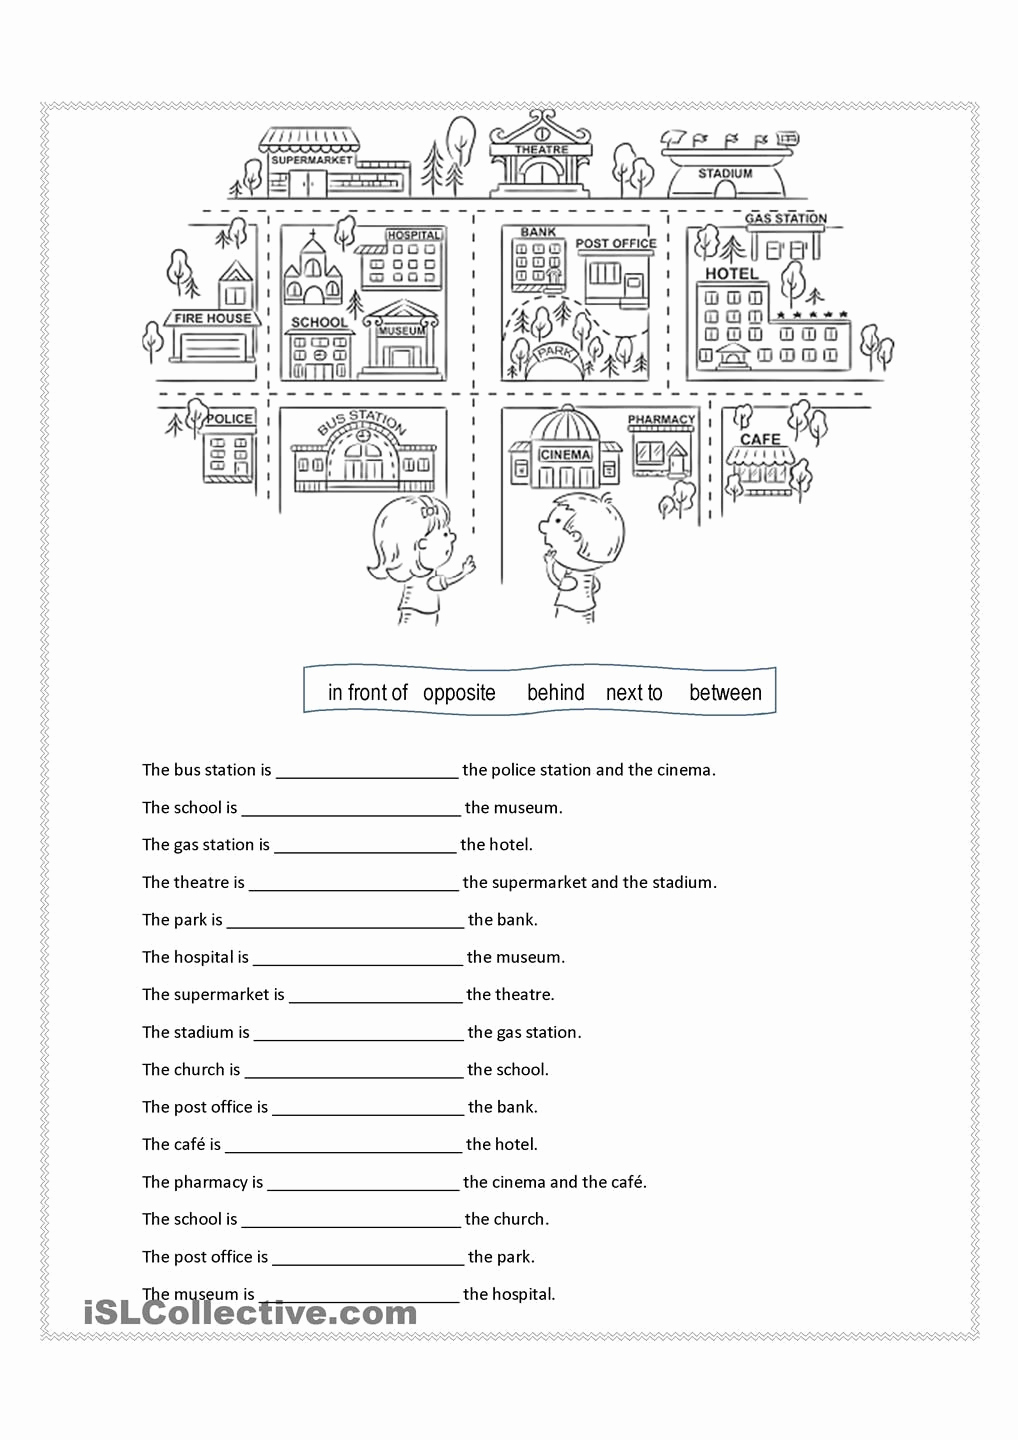 Preposition Worksheets Middle School Best Of Preposition Worksheets for Middle School